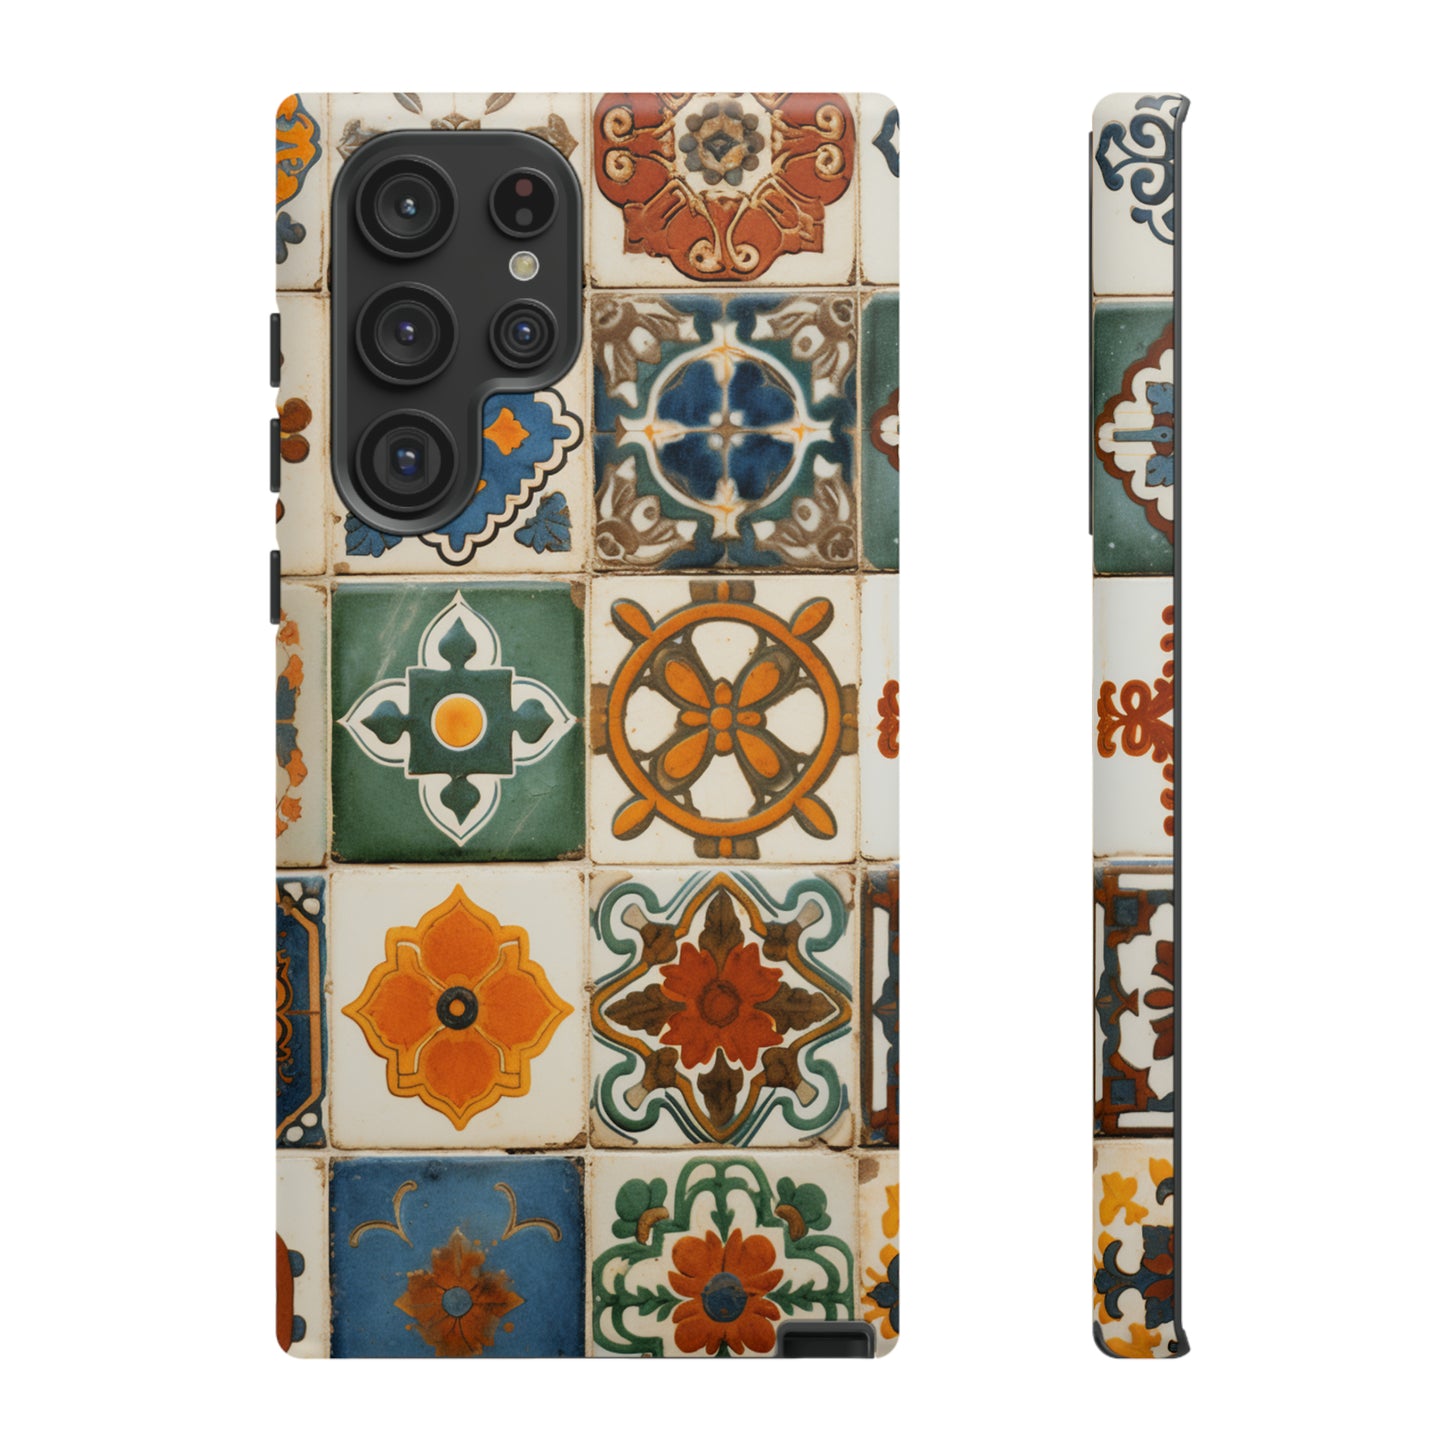 Moroccan Style Tile Art